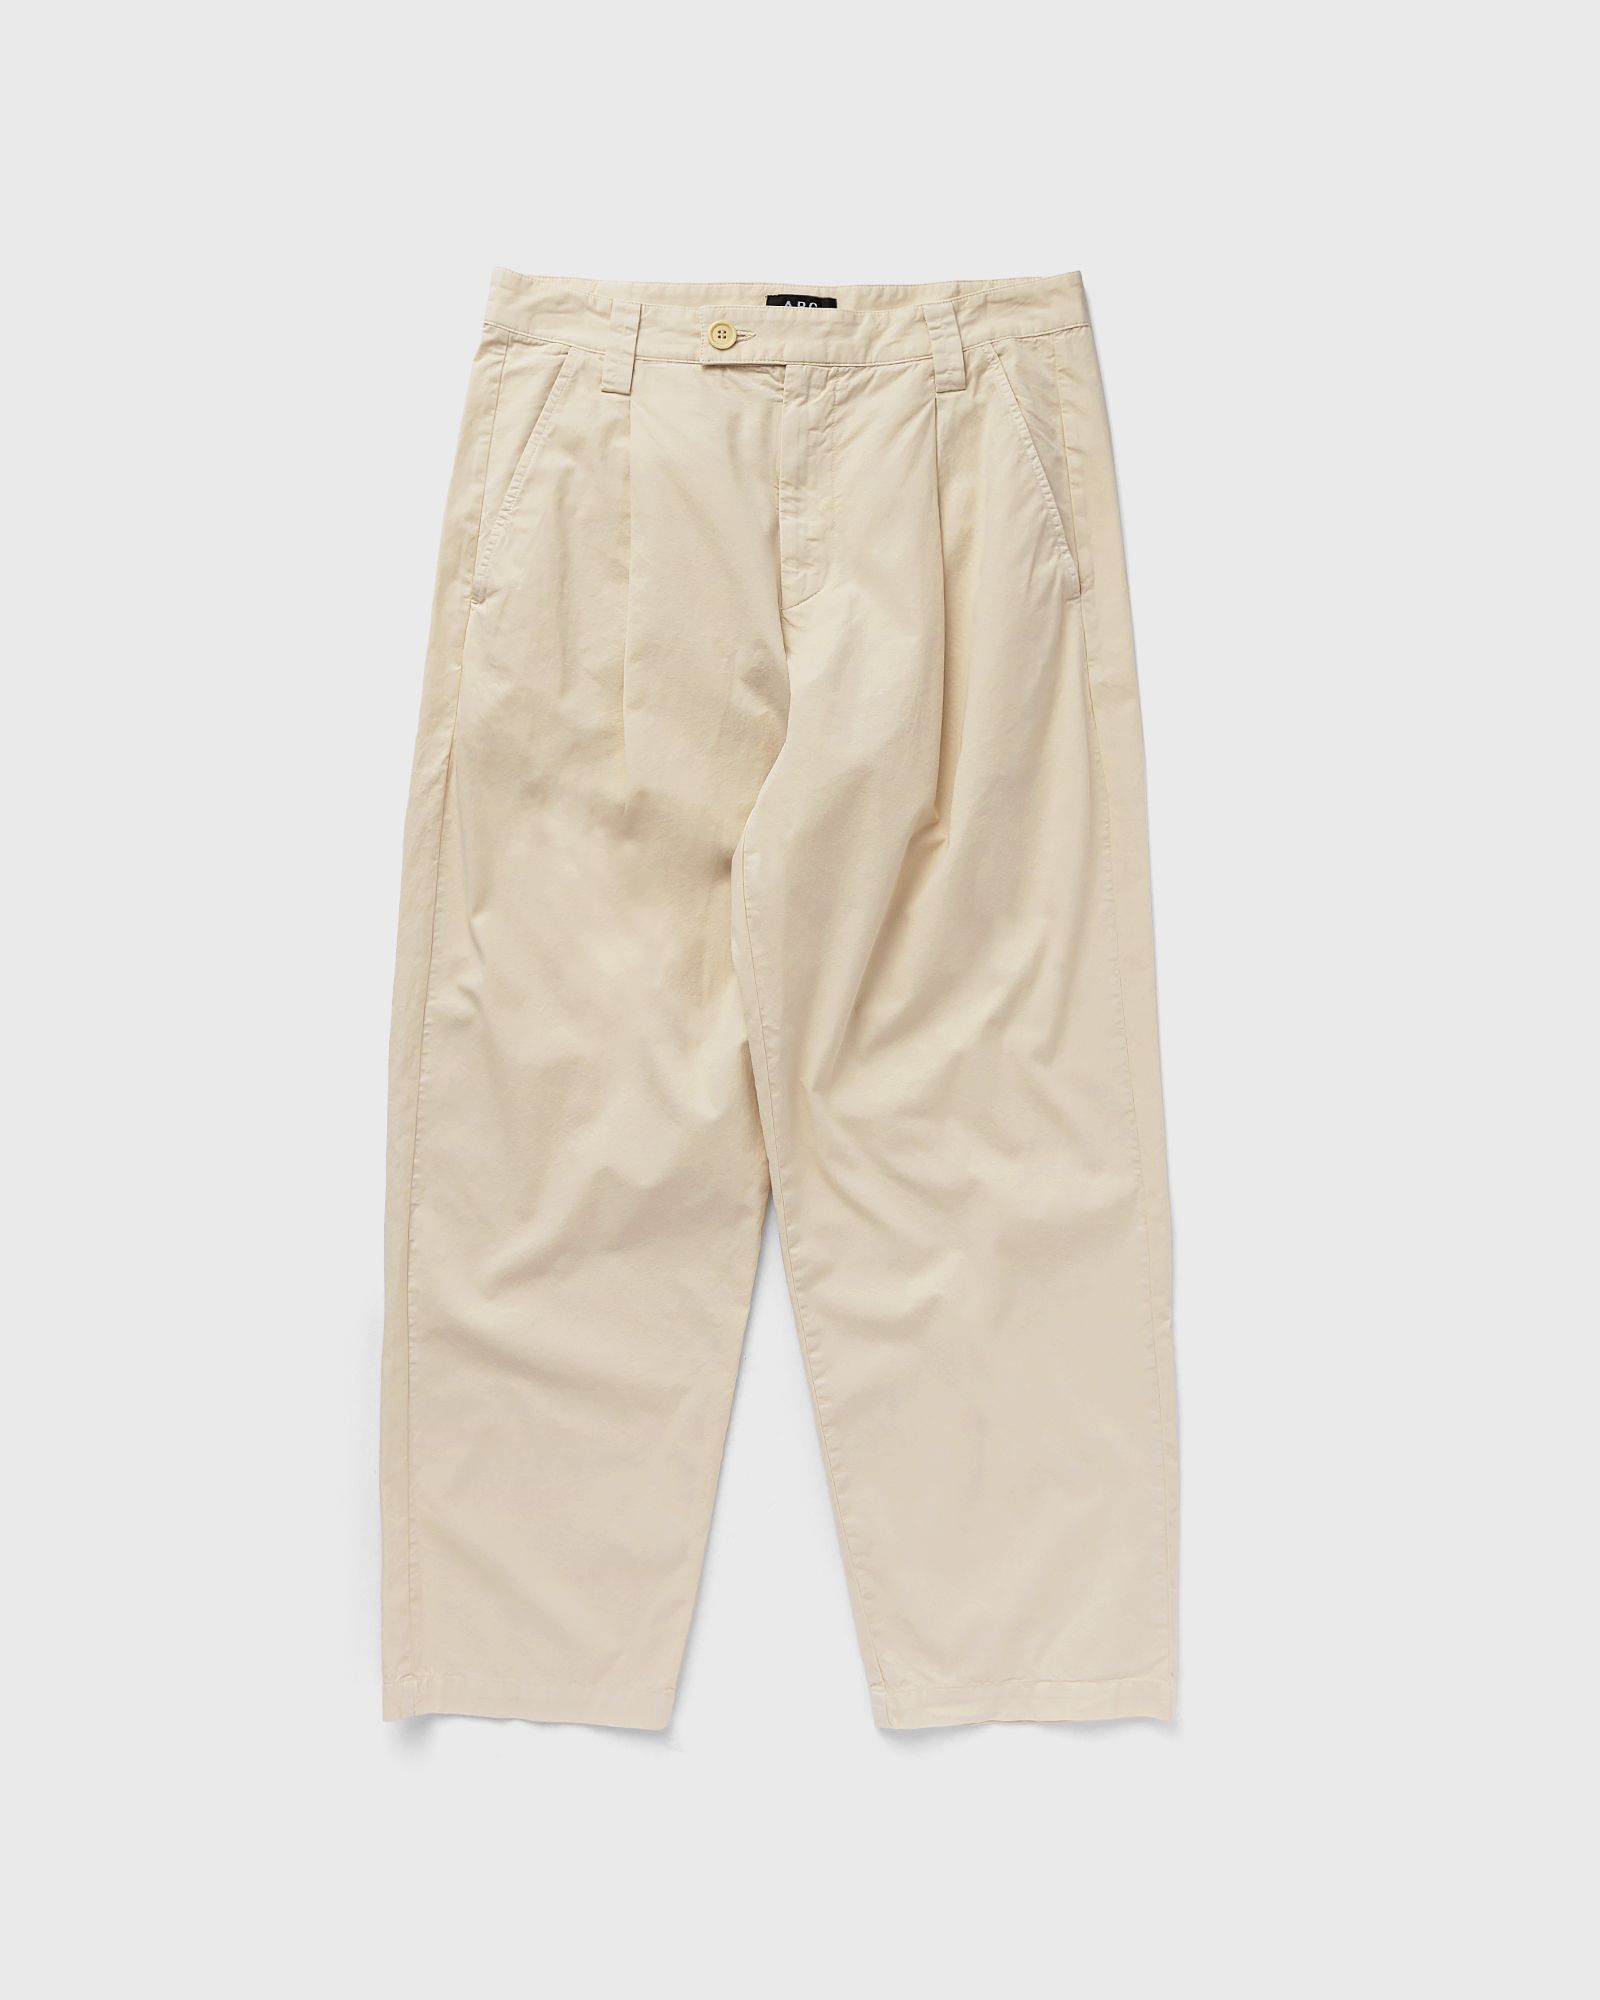 A.P.C. - pantalon renato men casual pants beige in größe:l